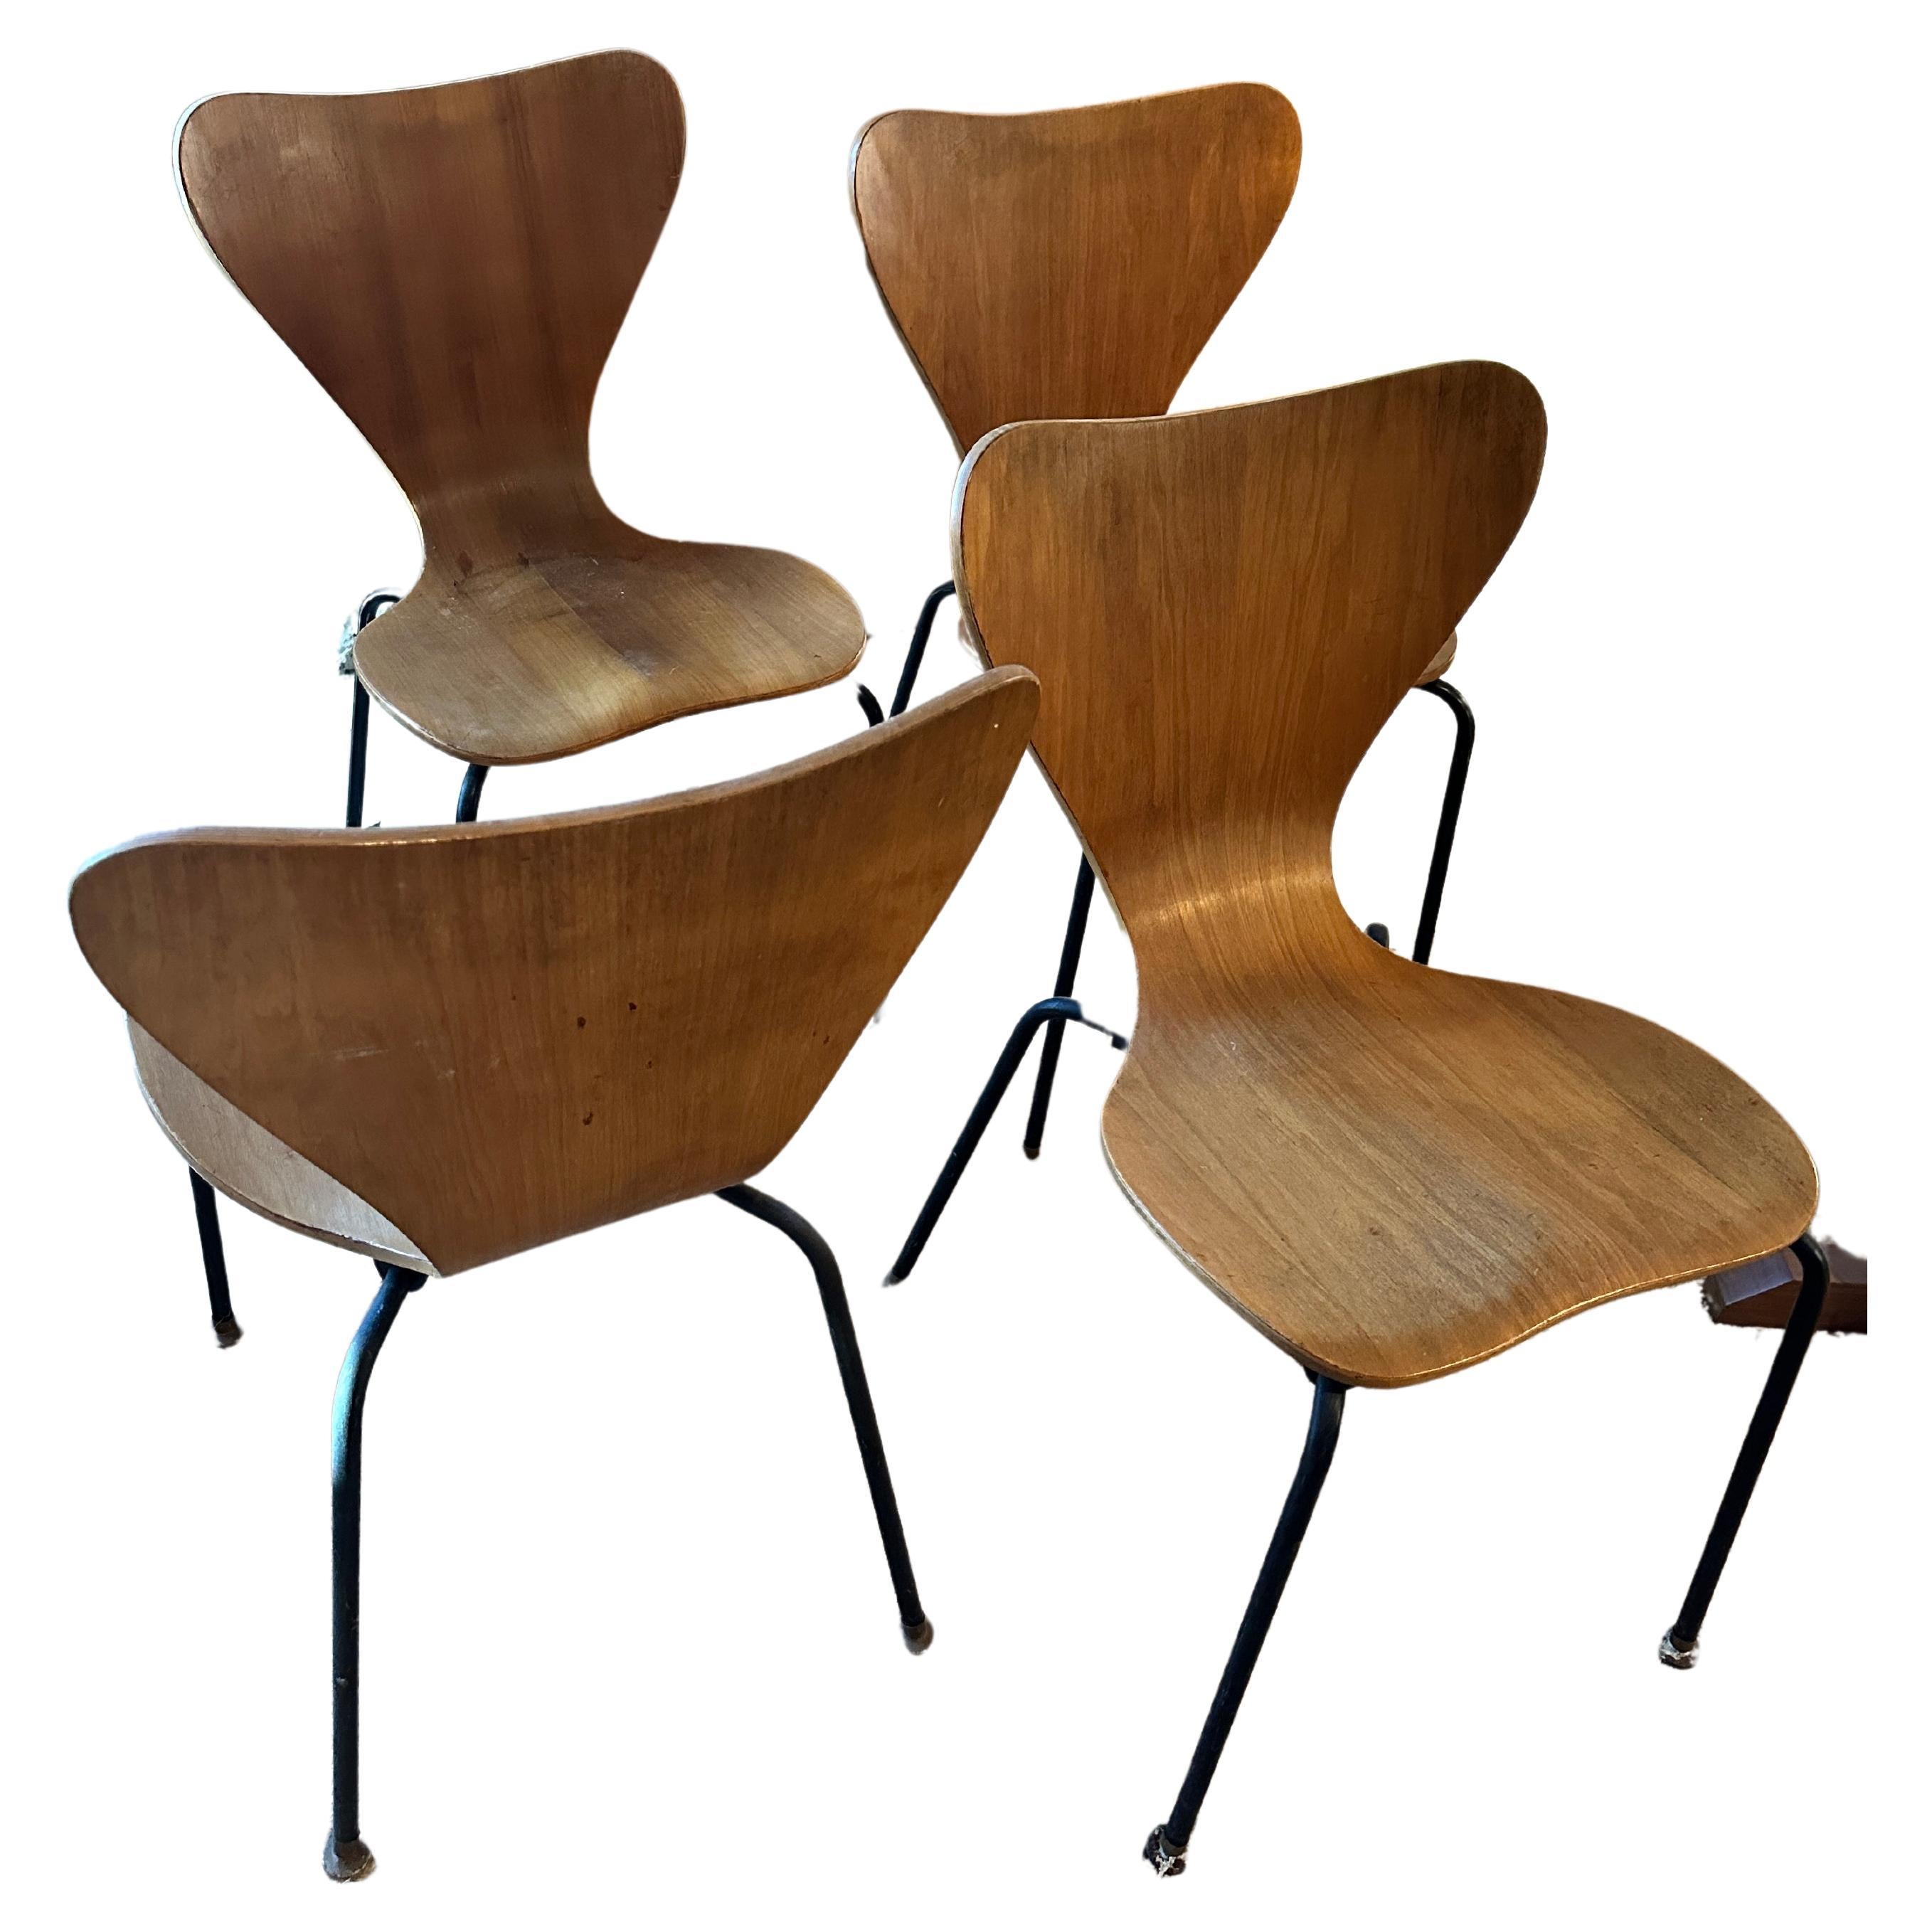 Danish Modern Chair in Teak by Herbert  Hirche for Jofa Stalmobler